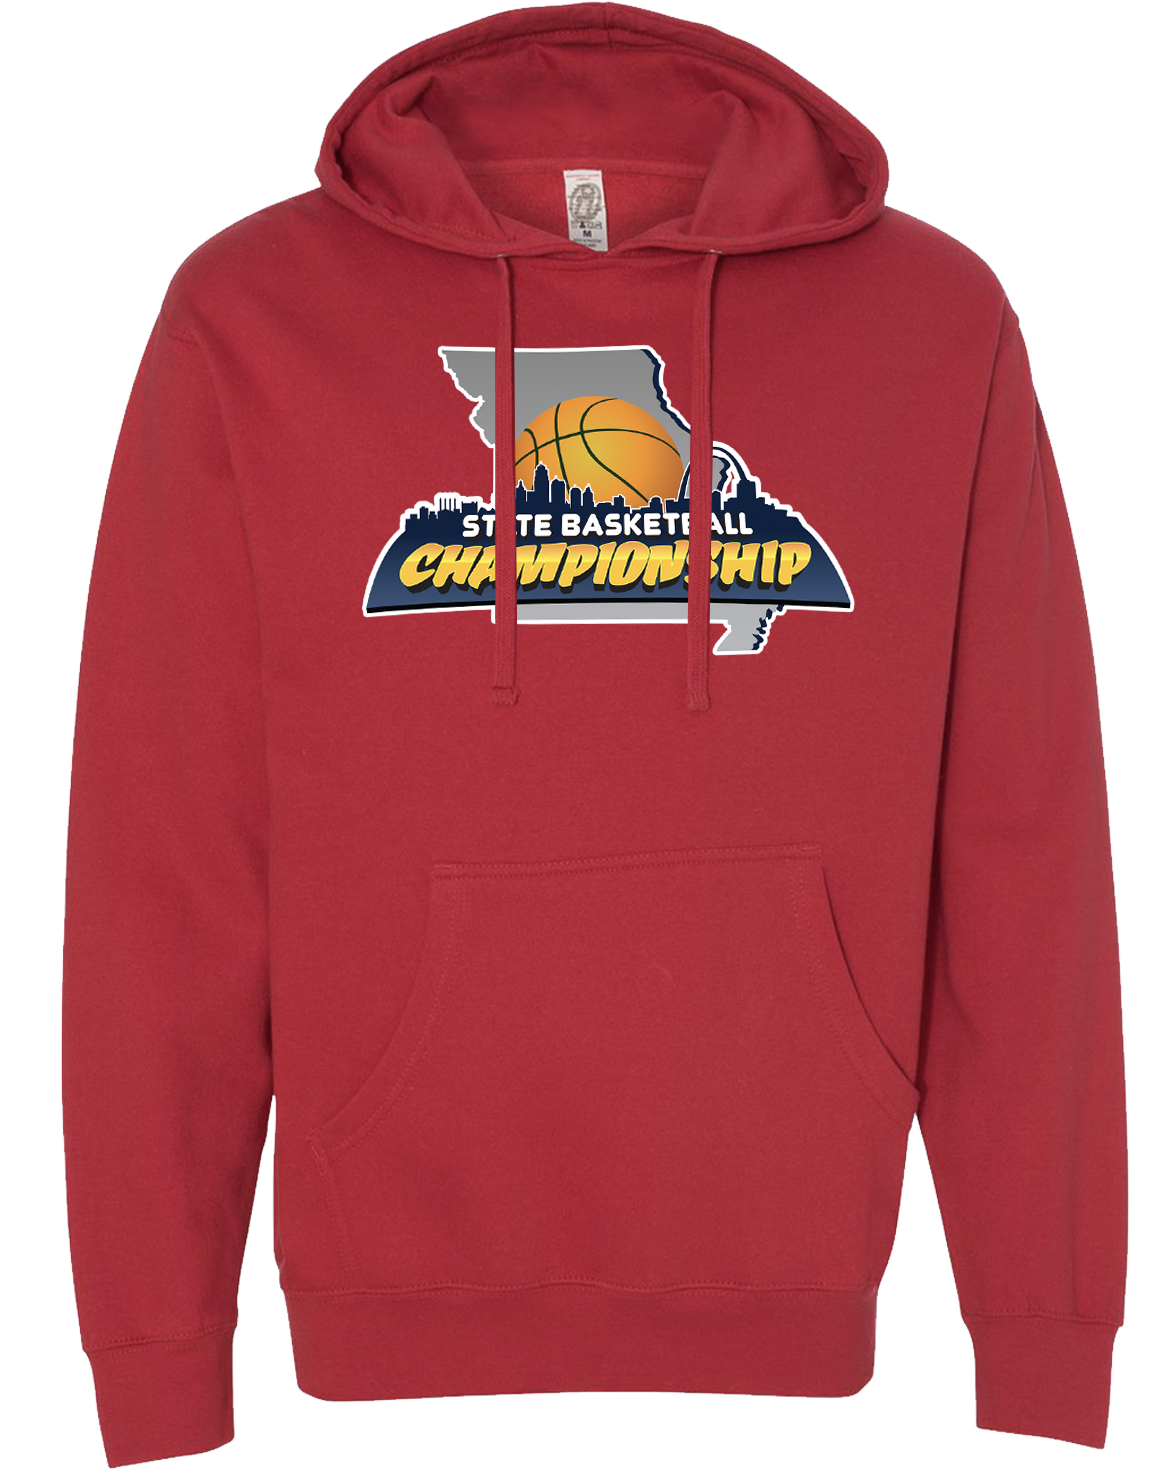 Red Missouri State Basketball Sweatshirt